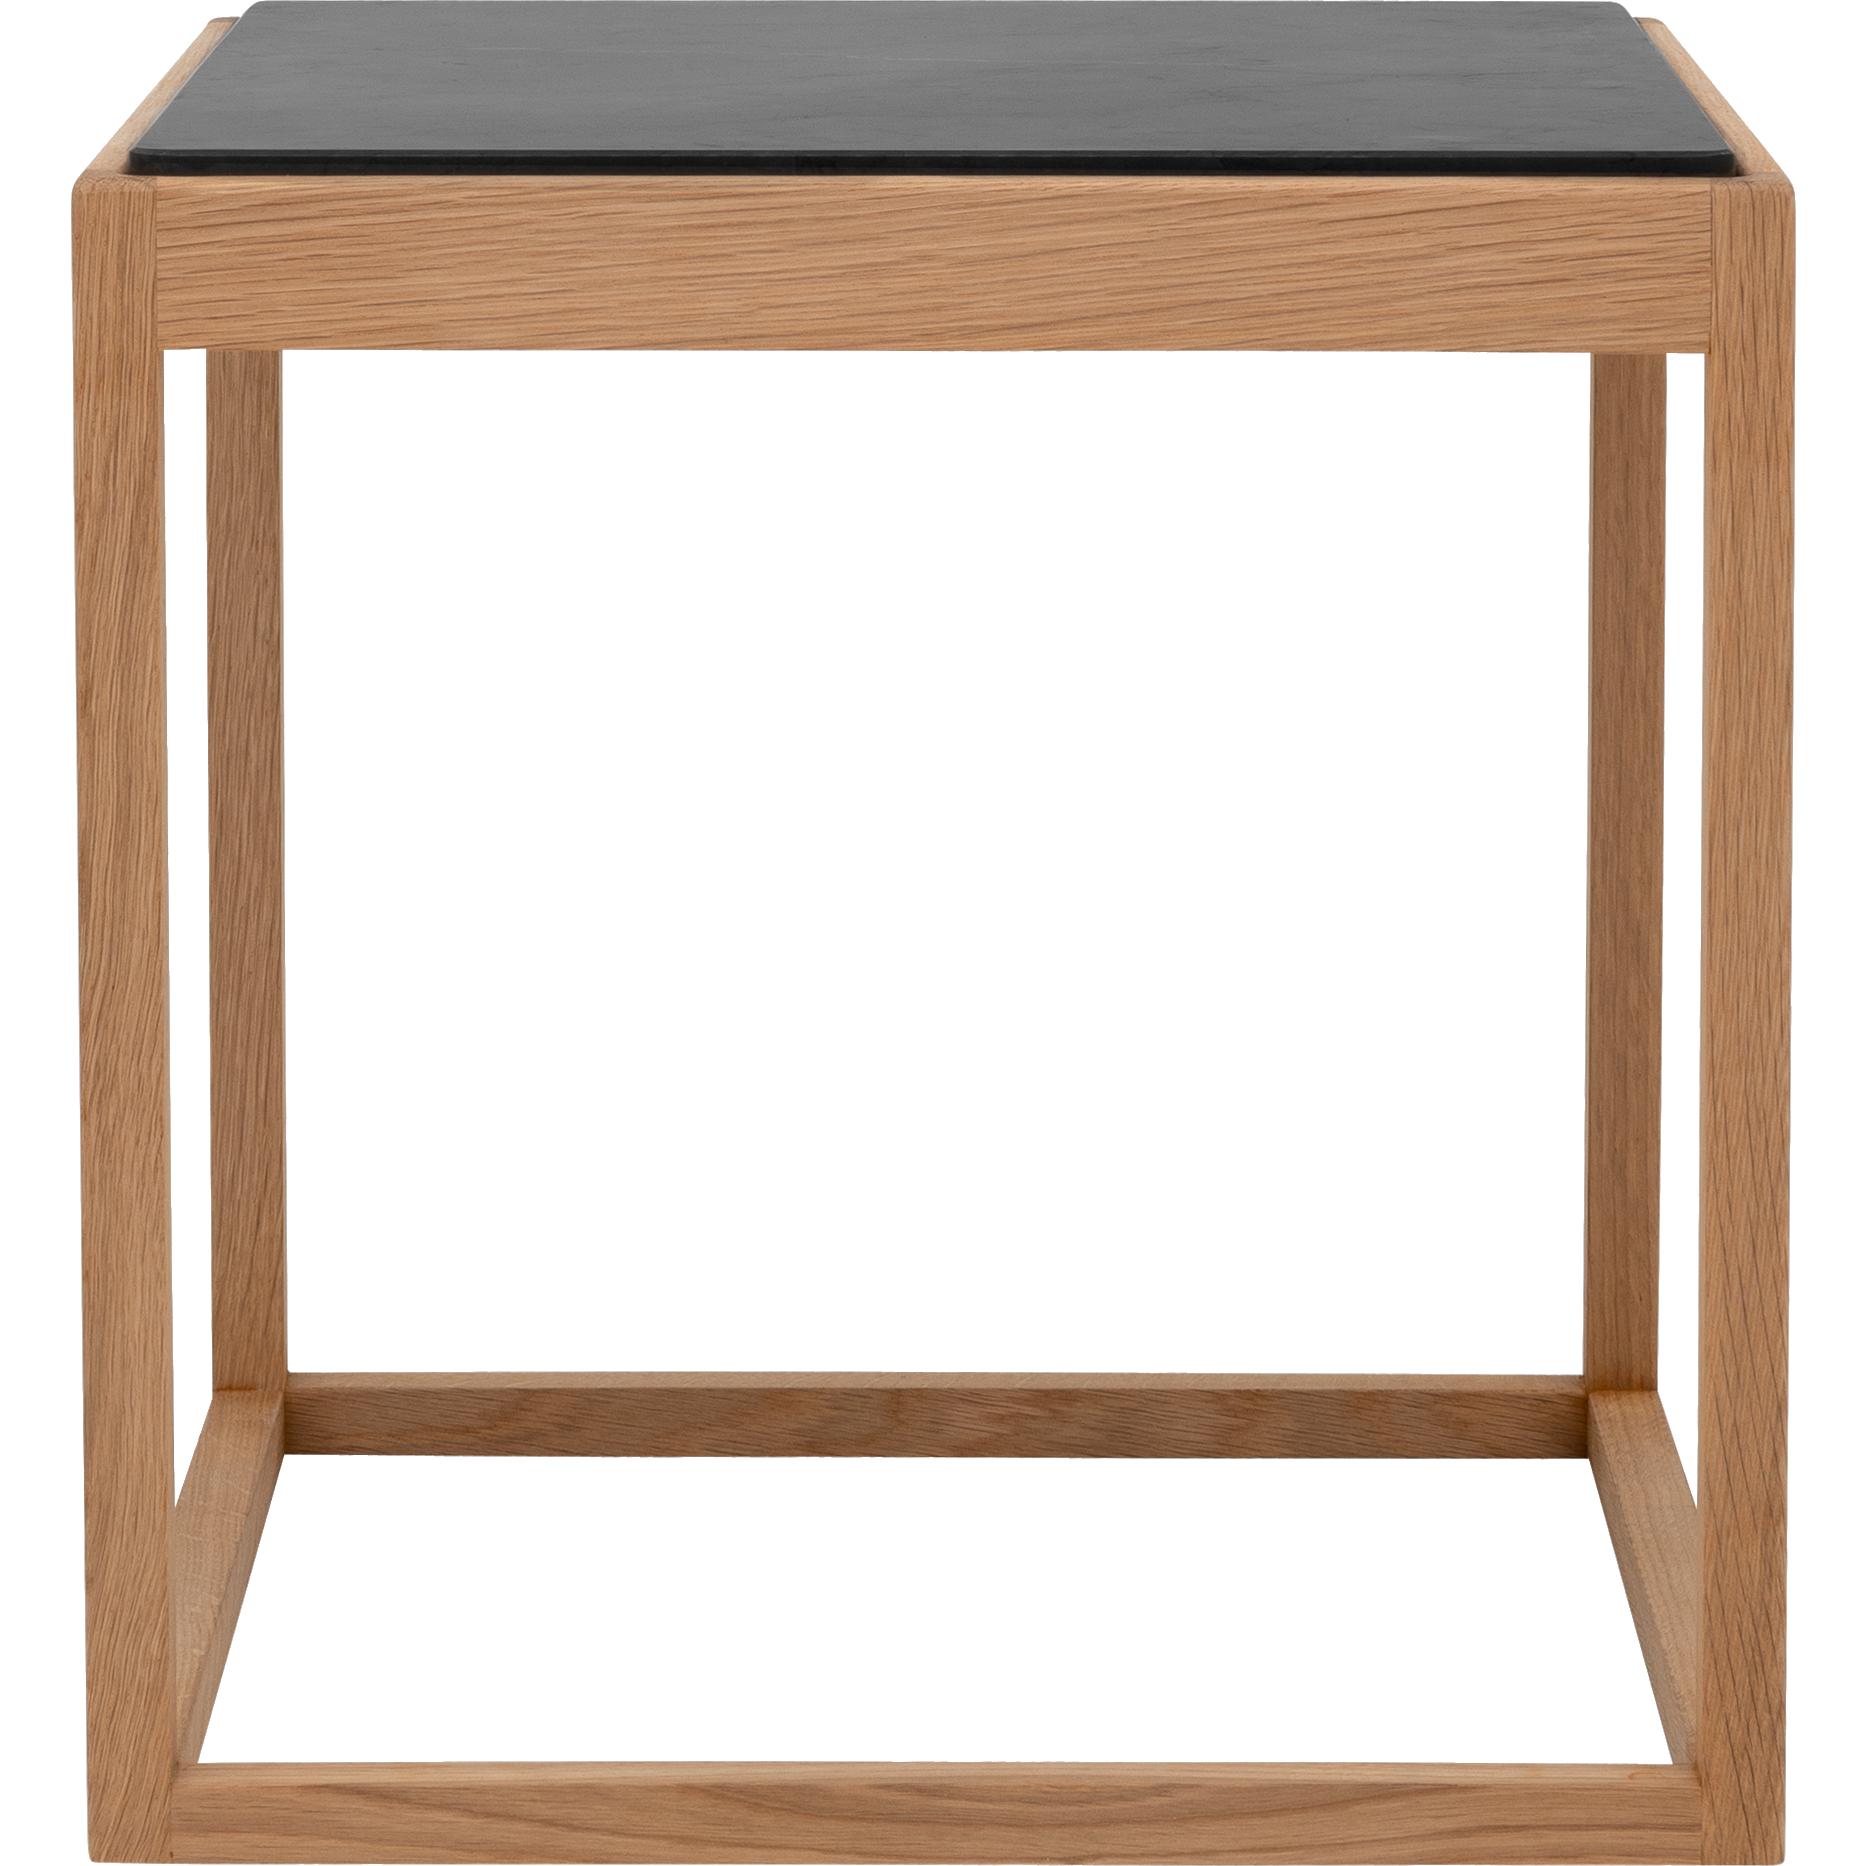 Klassik Studio Table d'appoint Kø cube Oak Hiled, Grey Marble